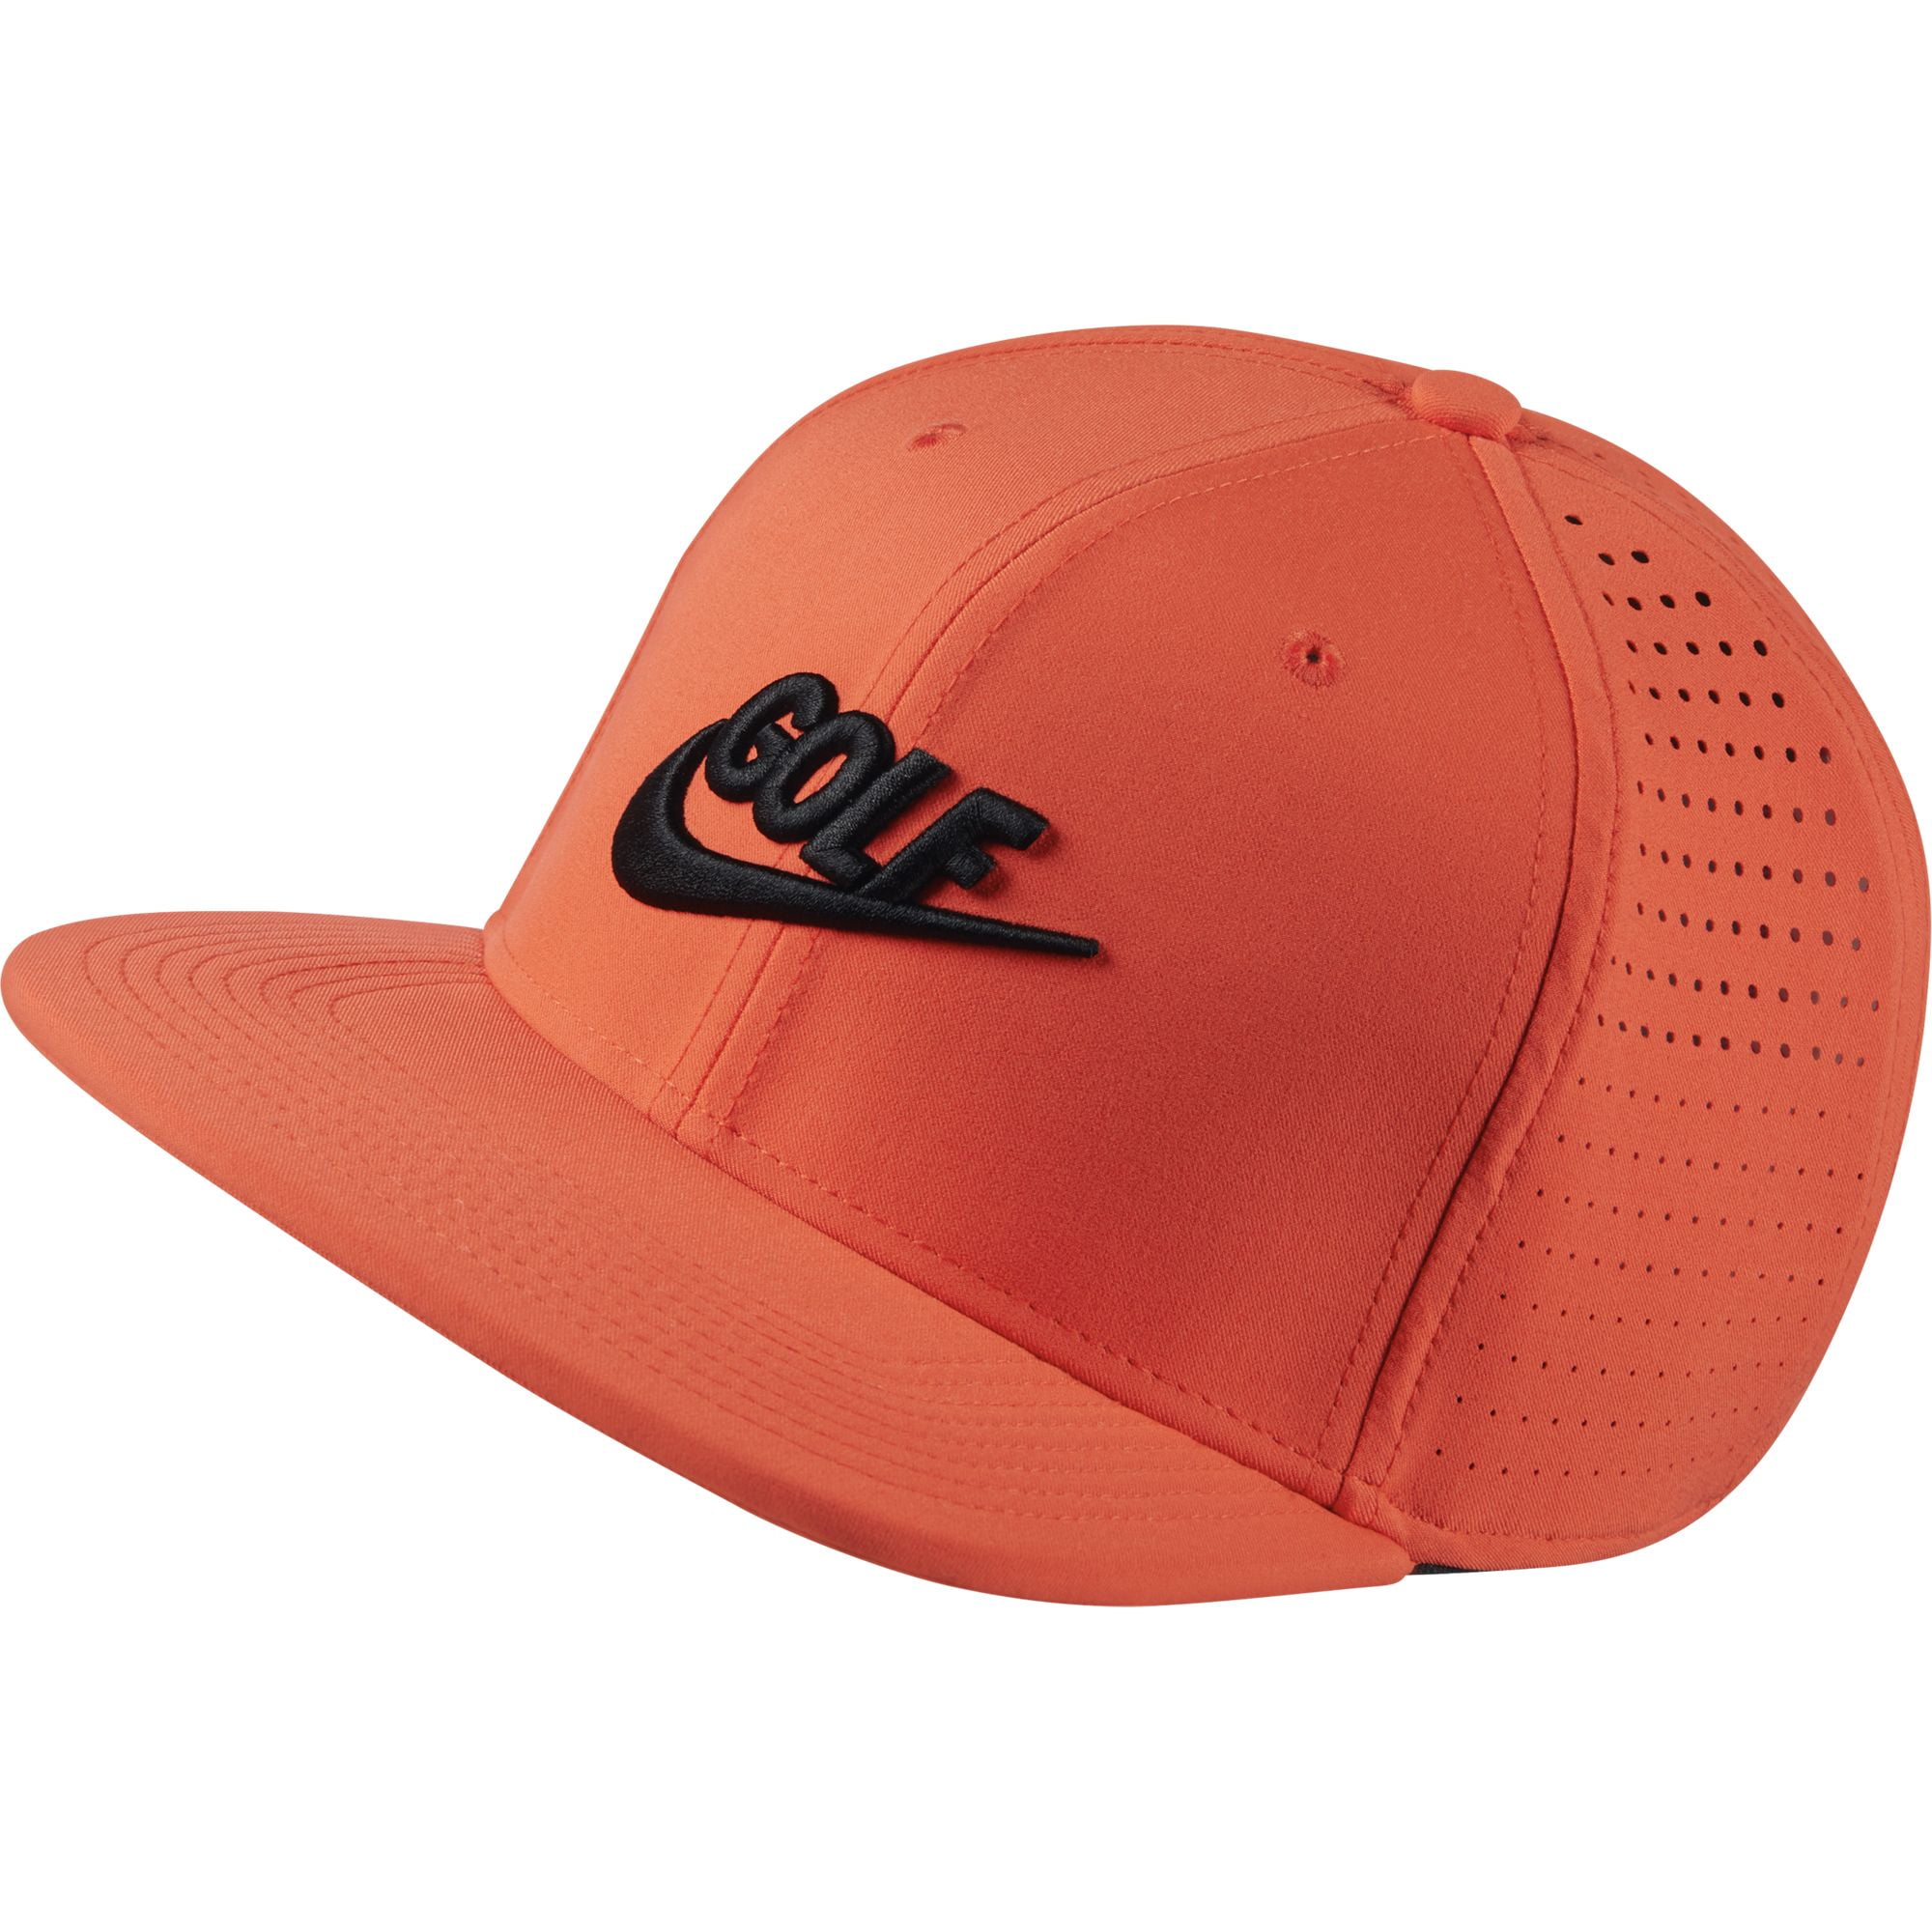 NEW Nike AeroBill Max Orange/Black Adjustable Snapback Flatbill Hat/Cap ...